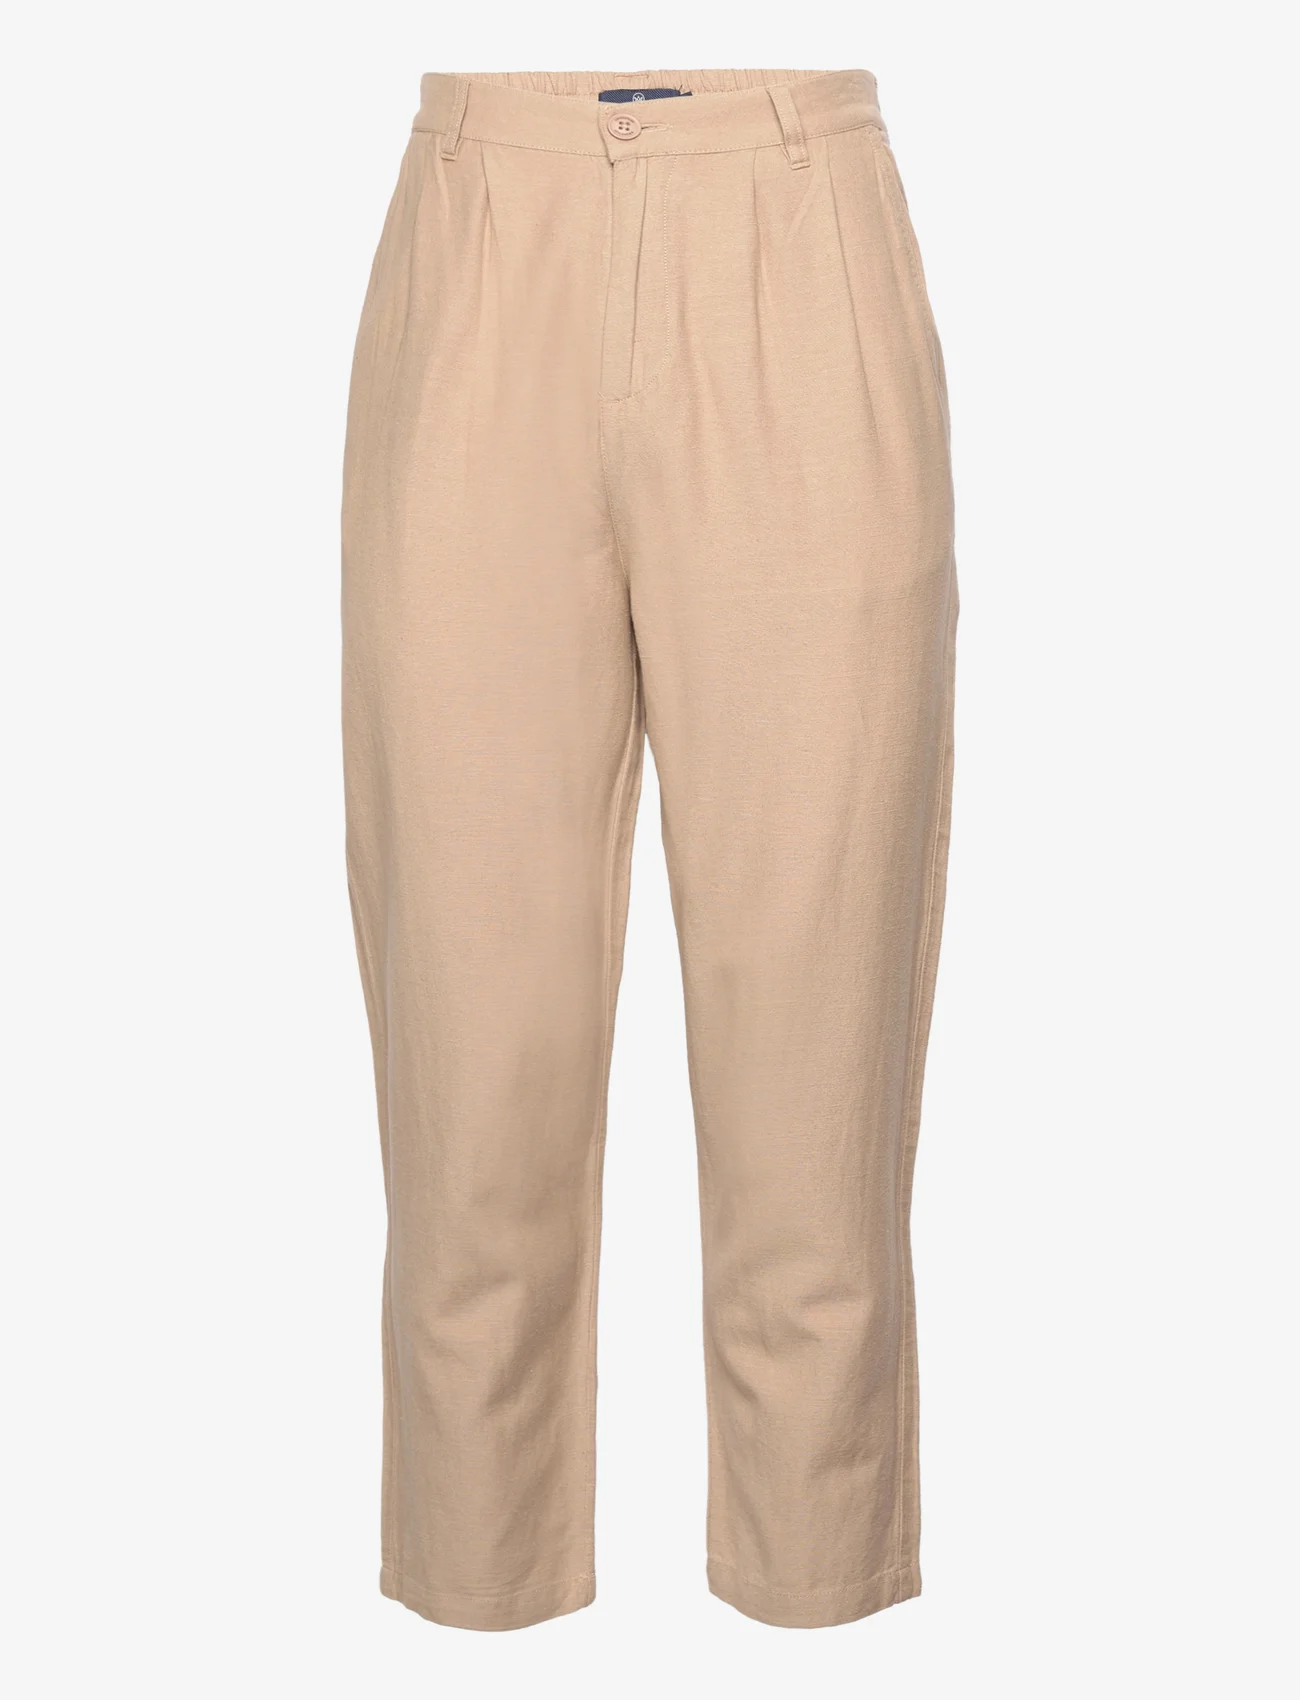 Kronstadt - Mason Linen pants - linen trousers - sand - 0